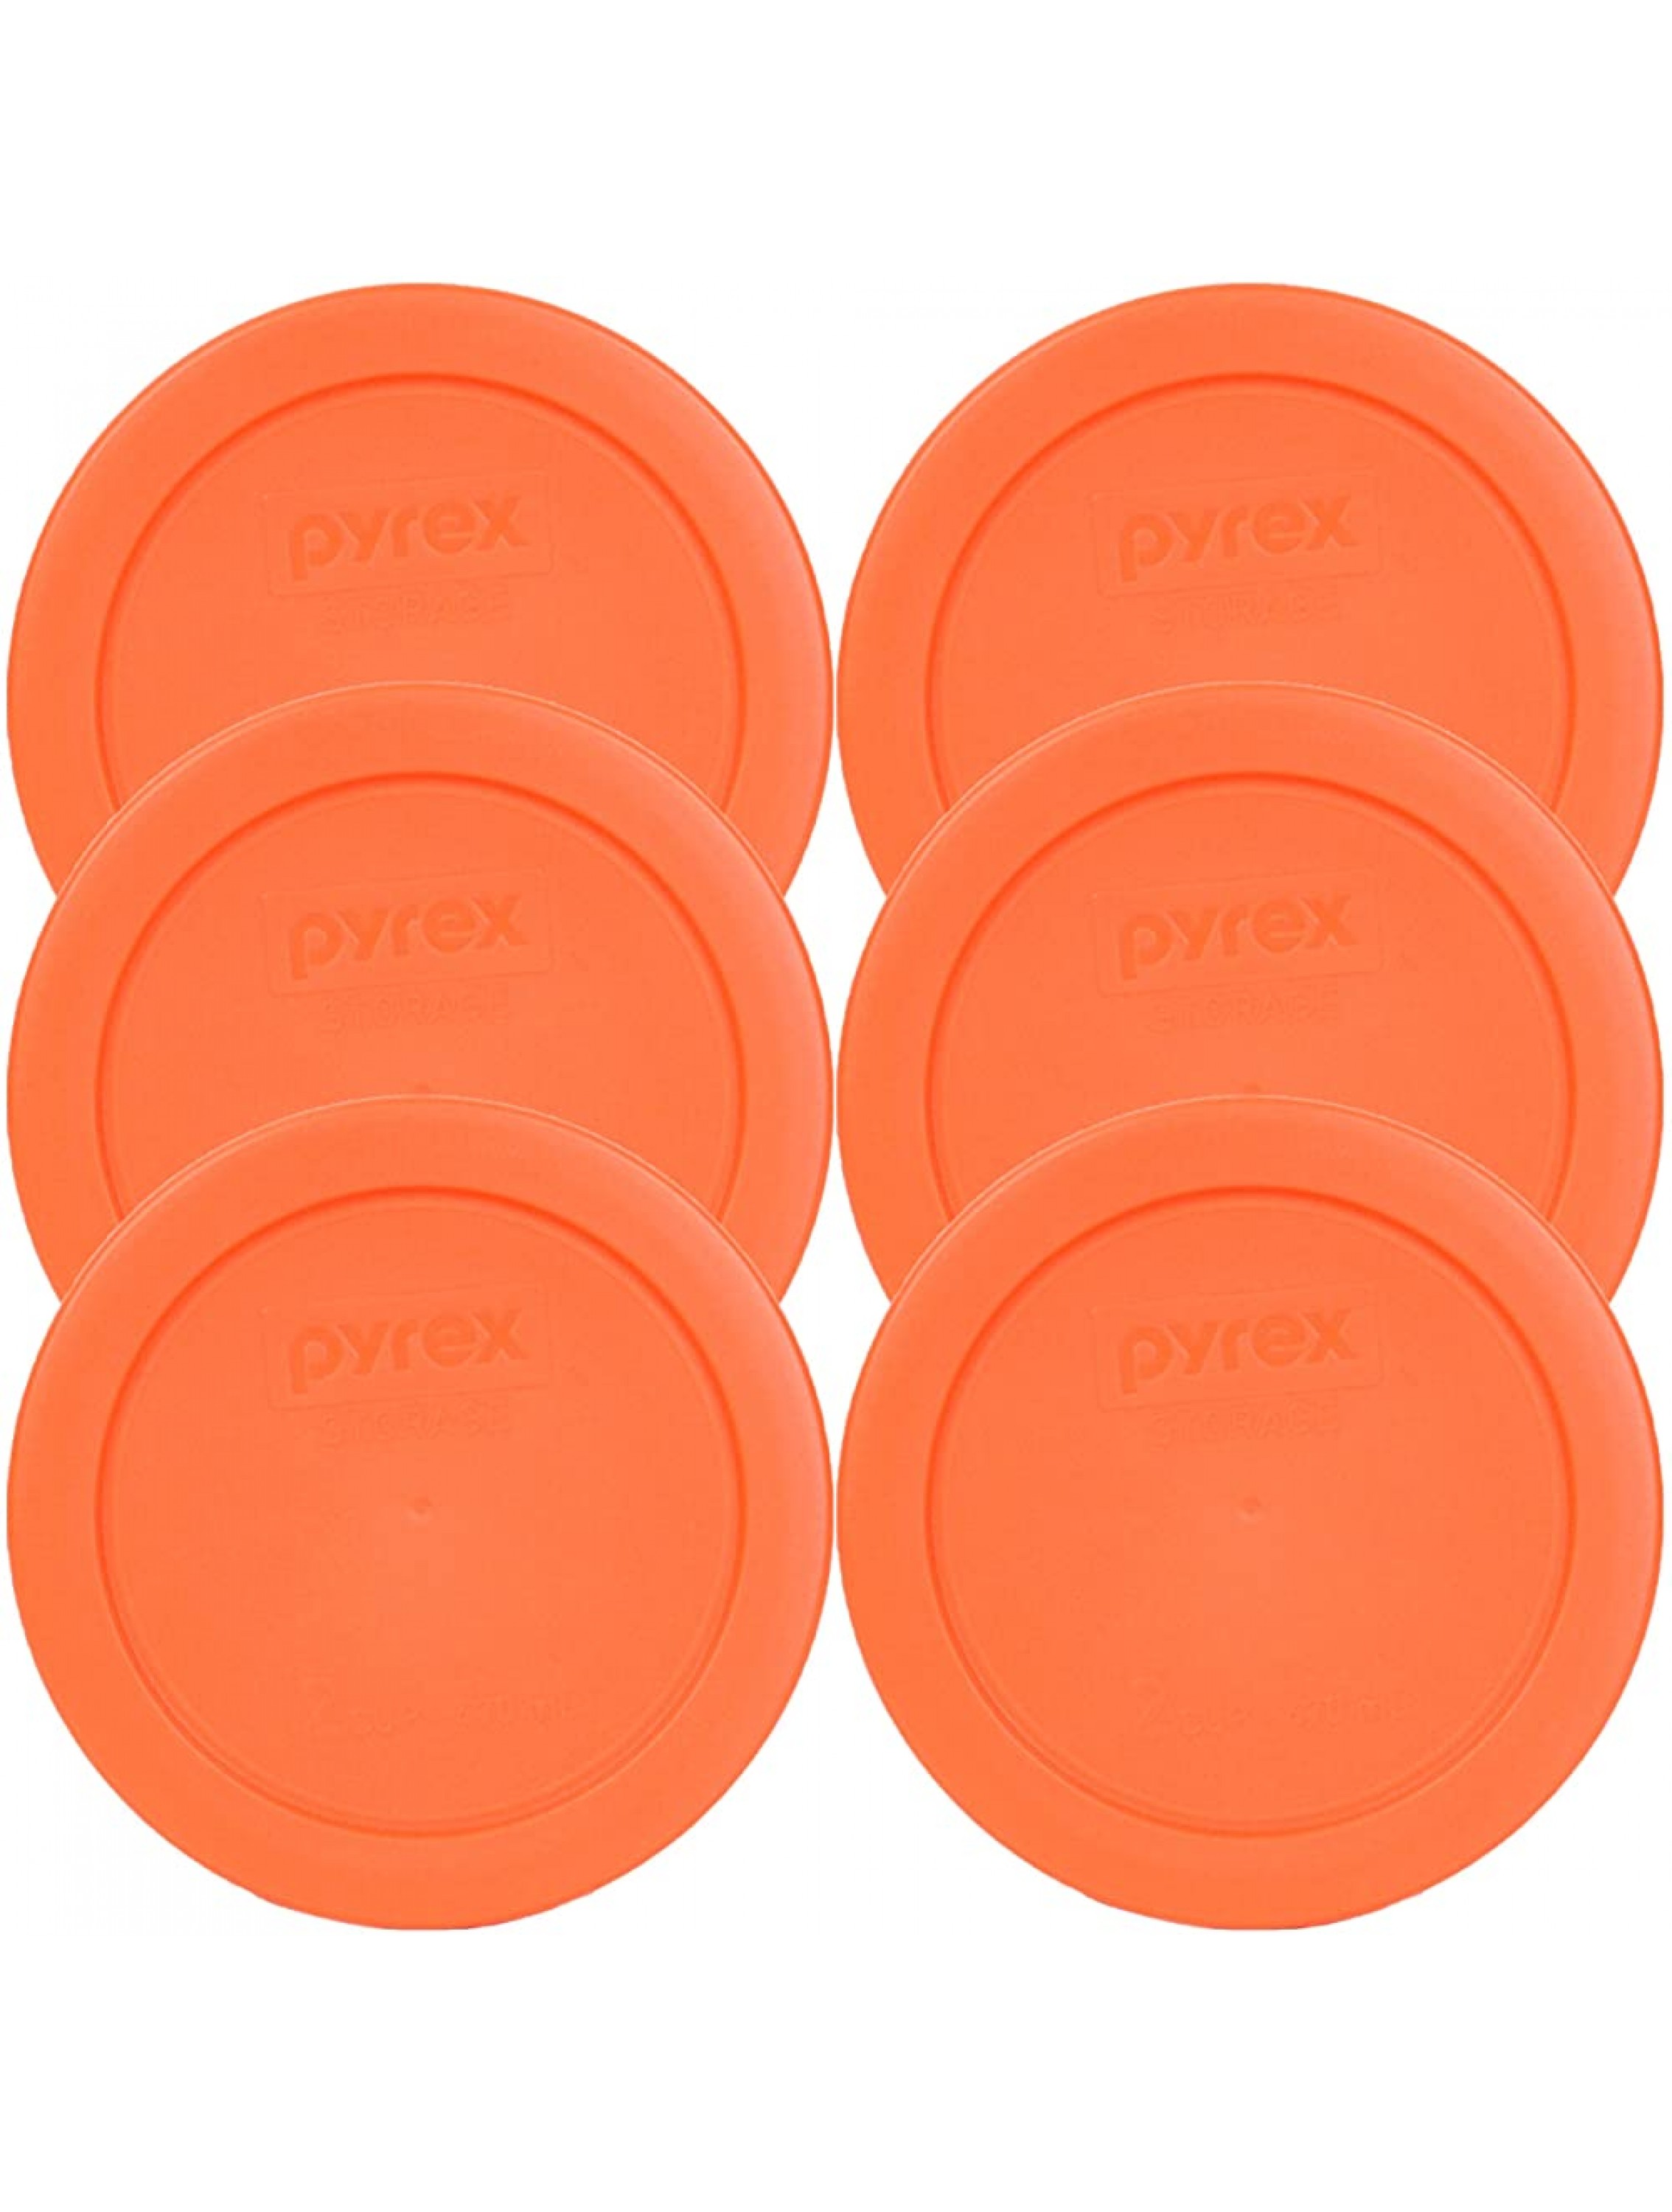 Pyrex 7200-PC Round 2 Cup Storage Lid for Glass Bowls 6 Orange - B40M0LL9O